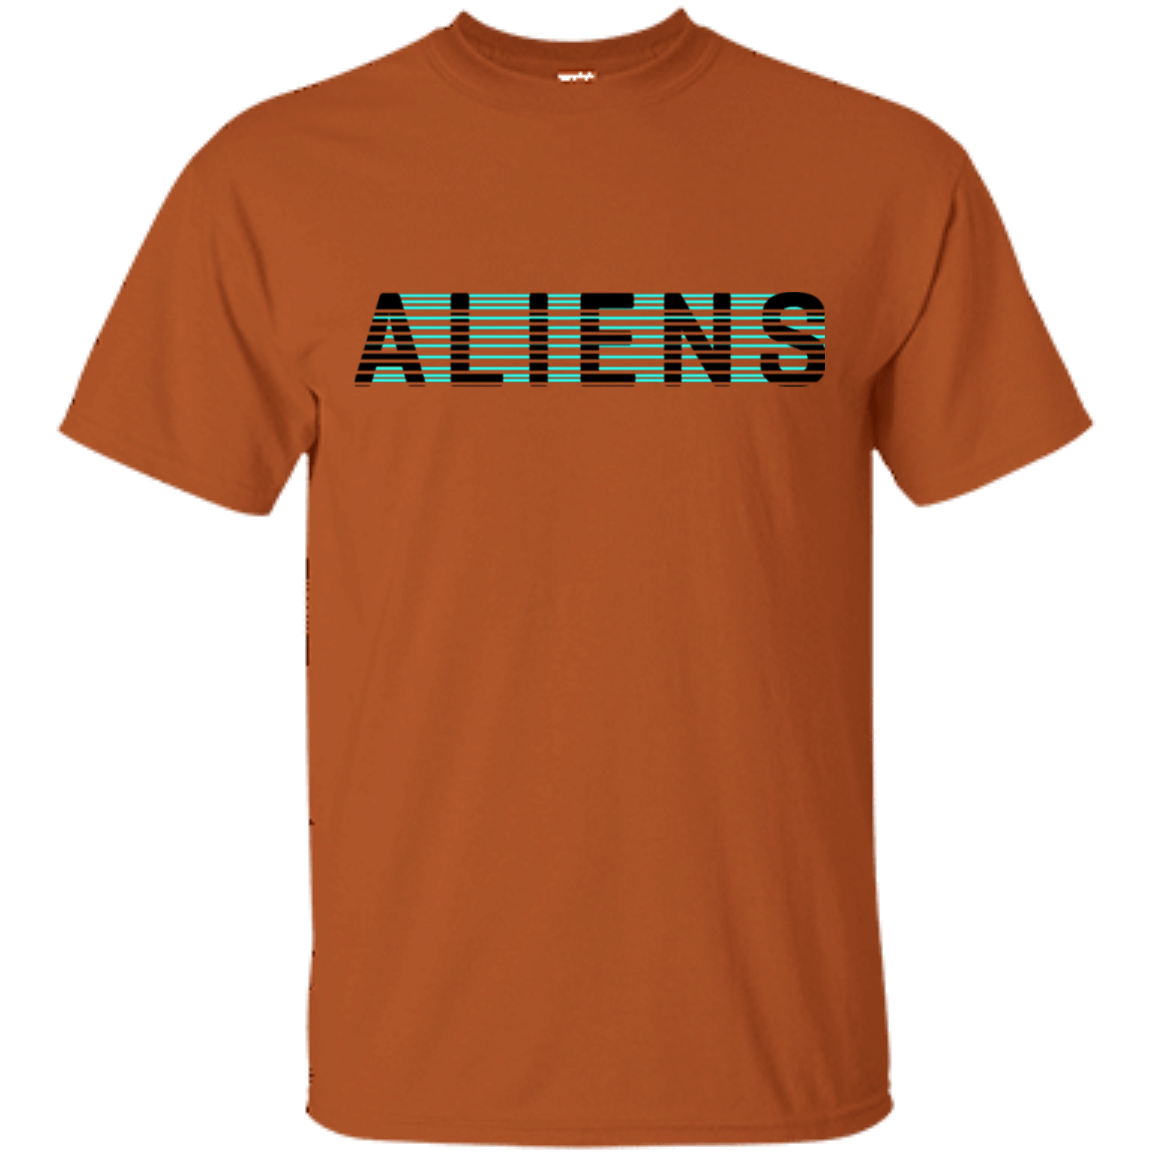 T-Shirts Texas Orange / S Aliens T-Shirt